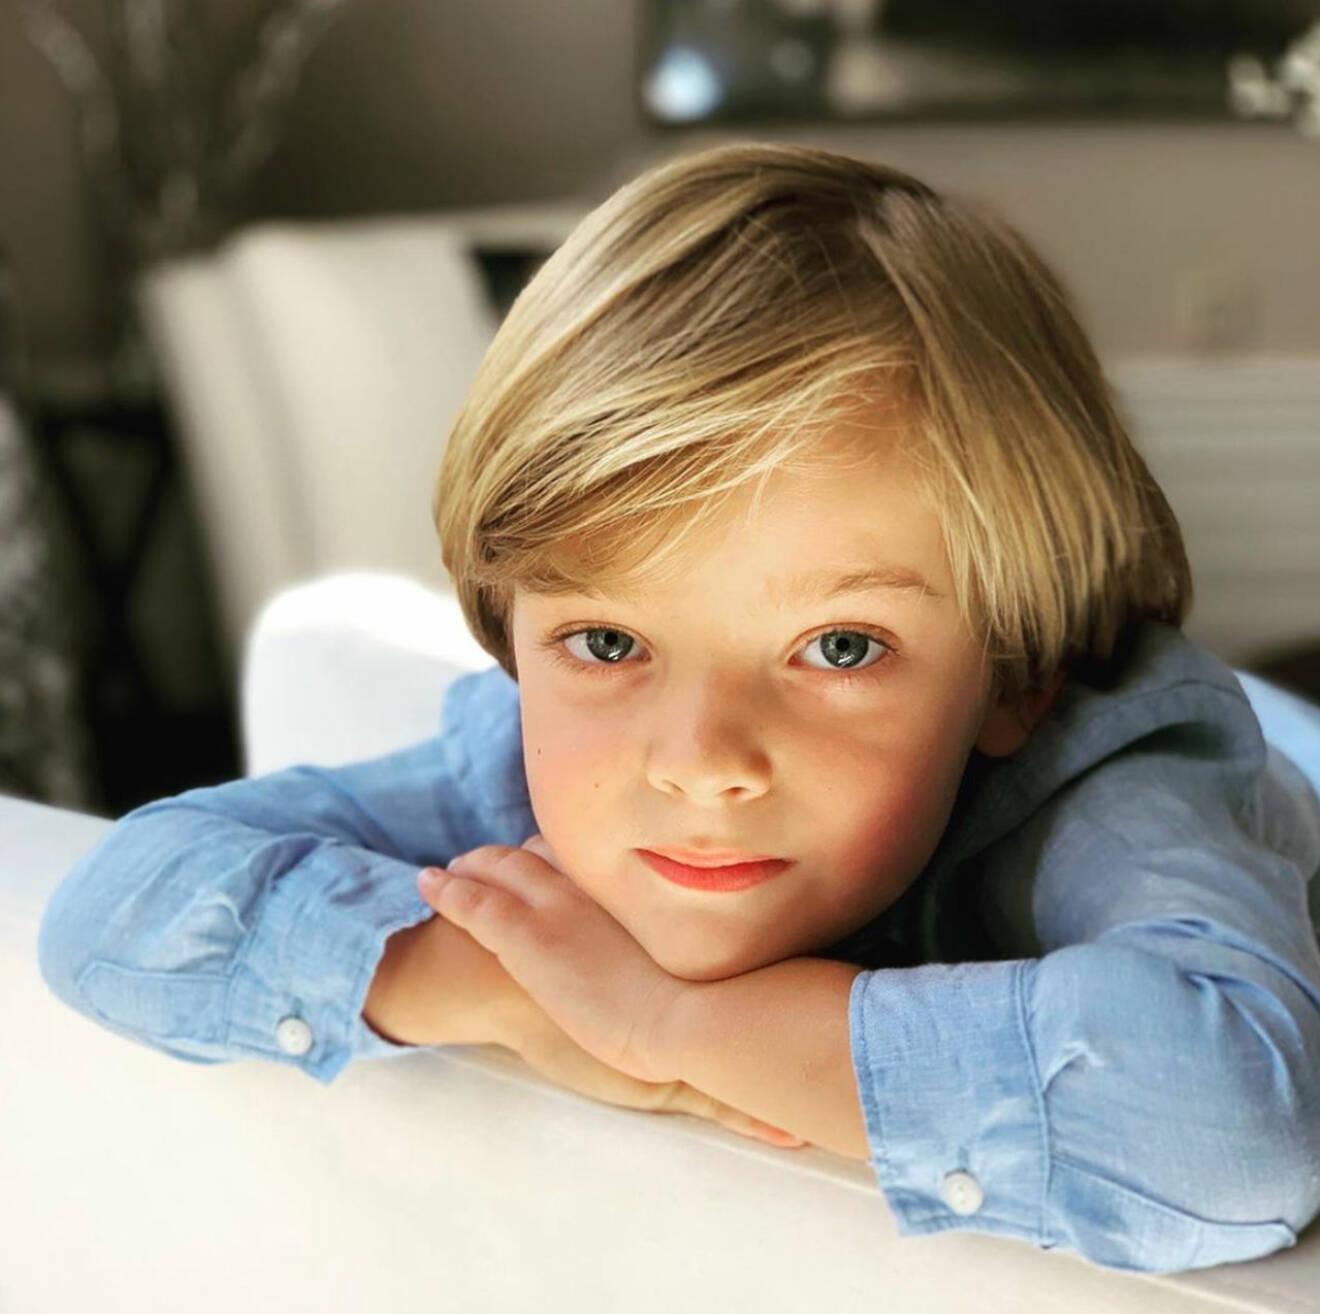 Prins Nicolas på födelsedagsbilden 2019.